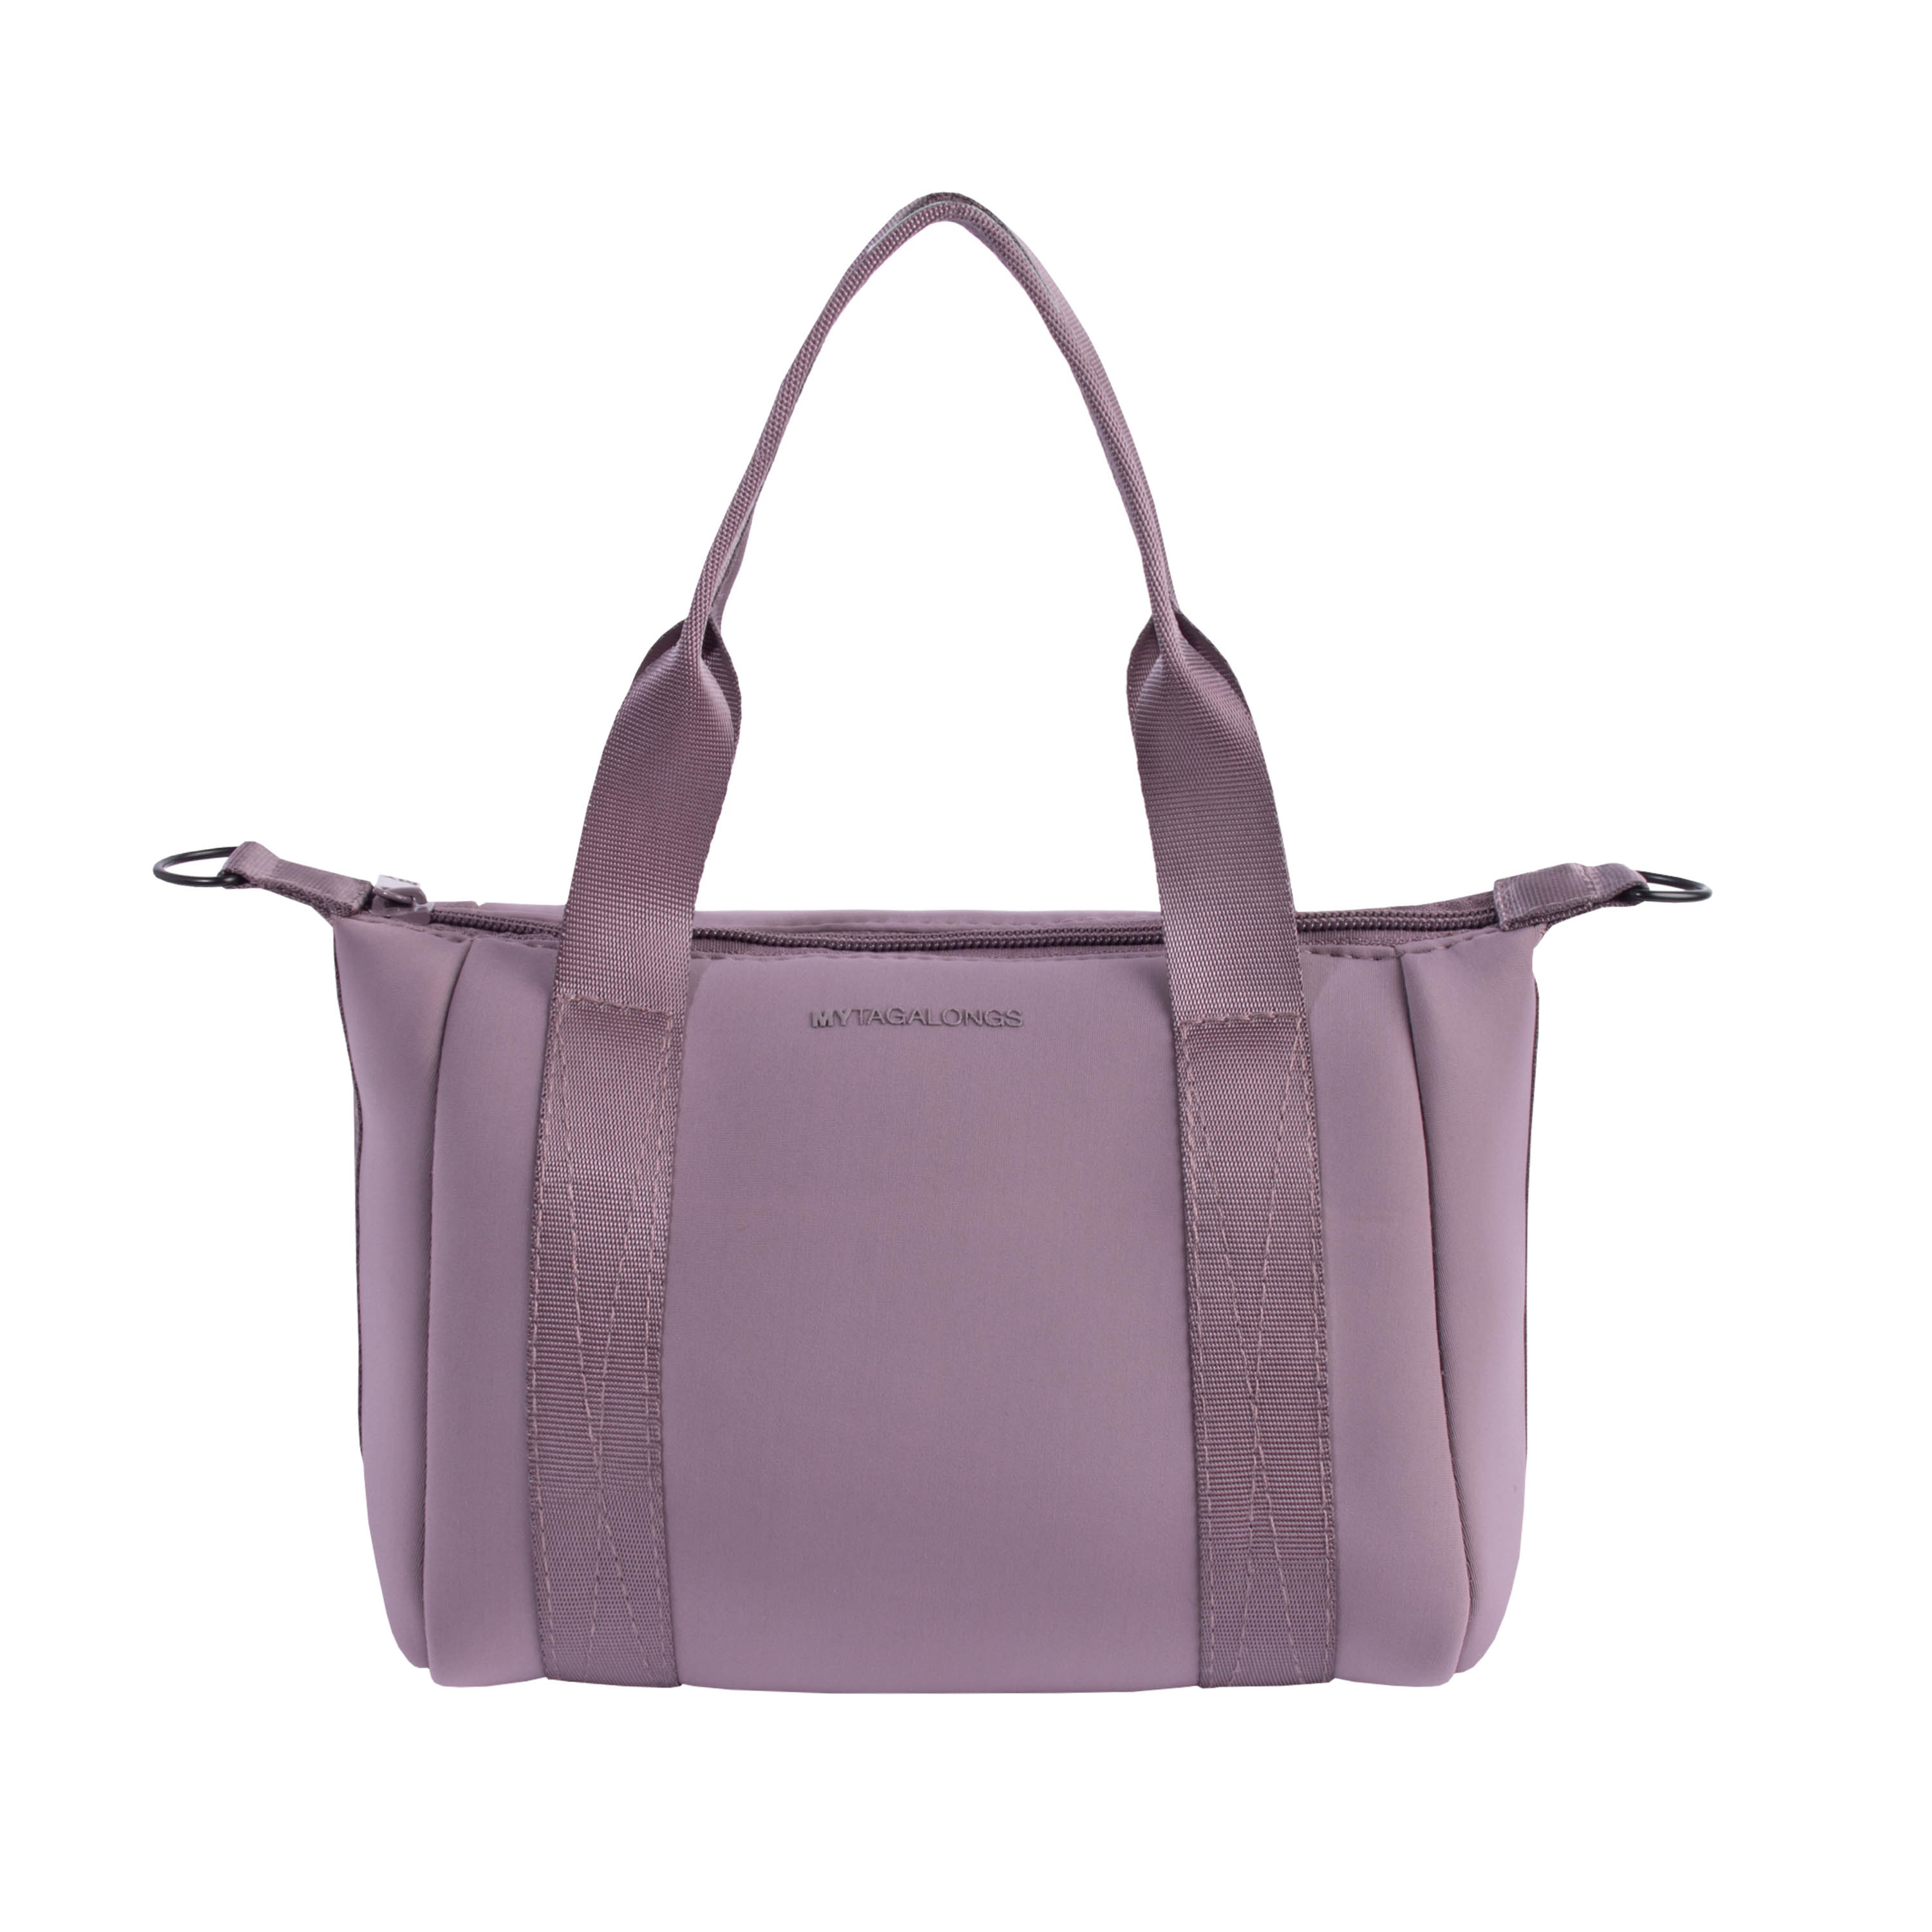 Purple mini purse made of neoprene